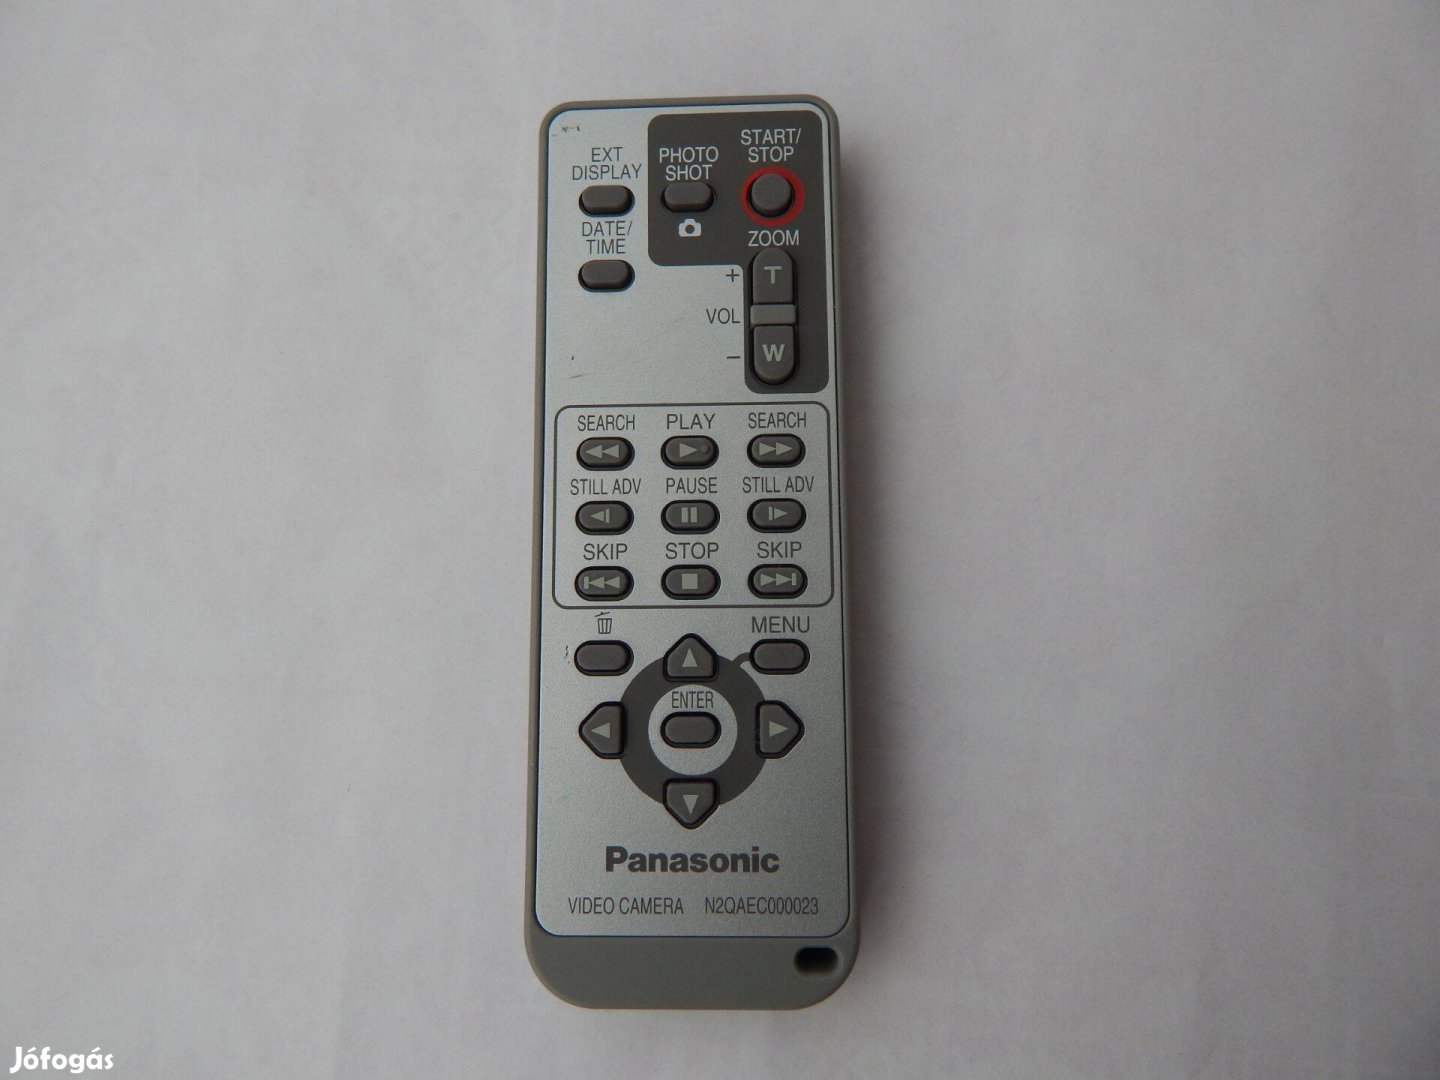 Panasonic Videókamera Video Camera N2Qaec000023 Tipusú Távirányítója